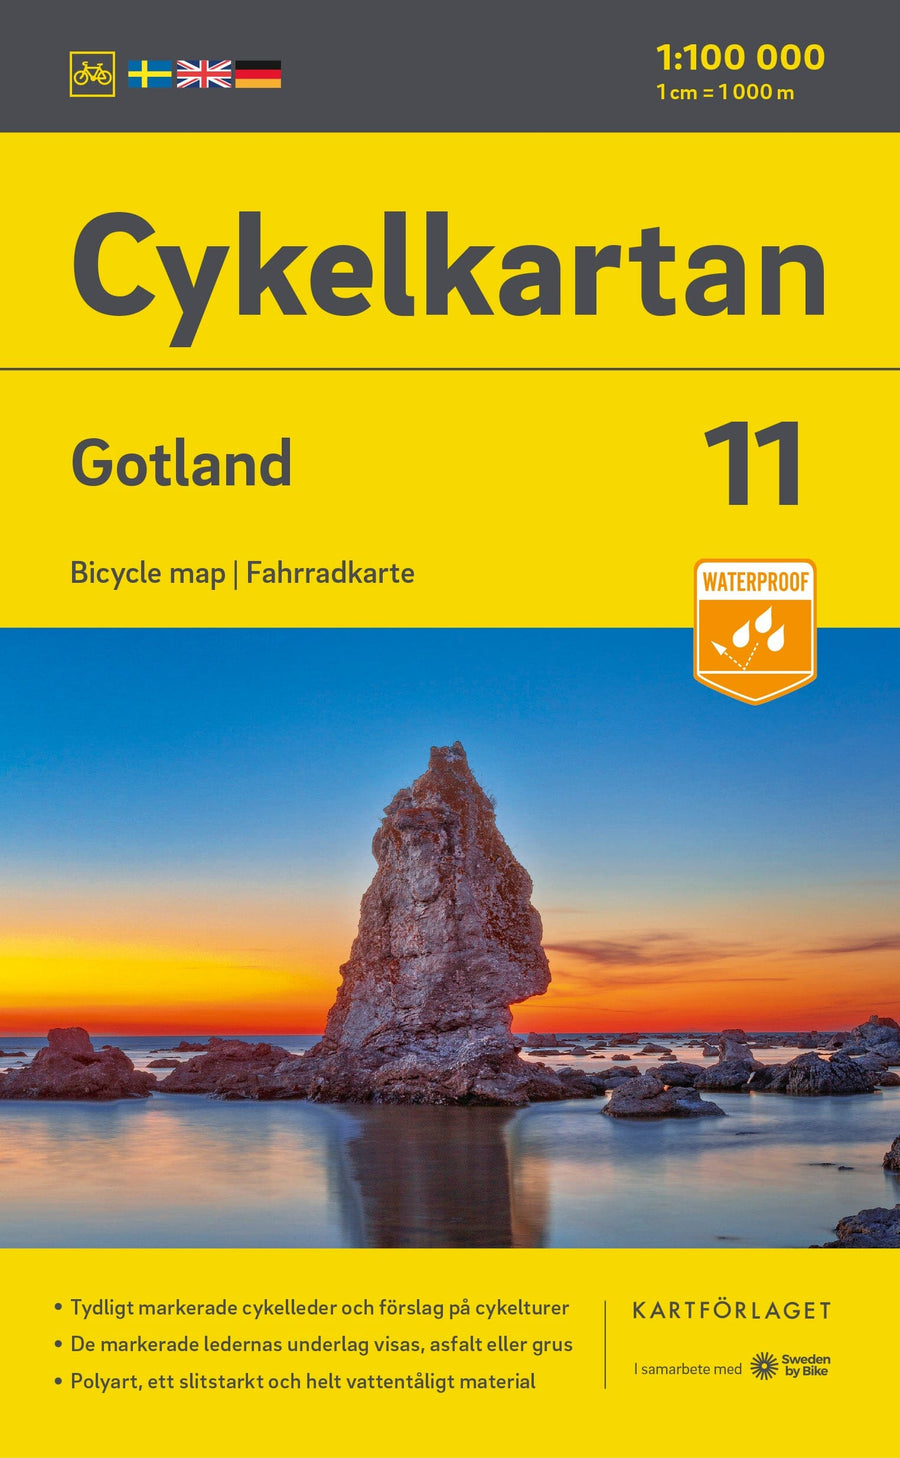 Carte cycliste n° 11 - Gotland (Suède) | Norstedts carte pliée Norstedts 